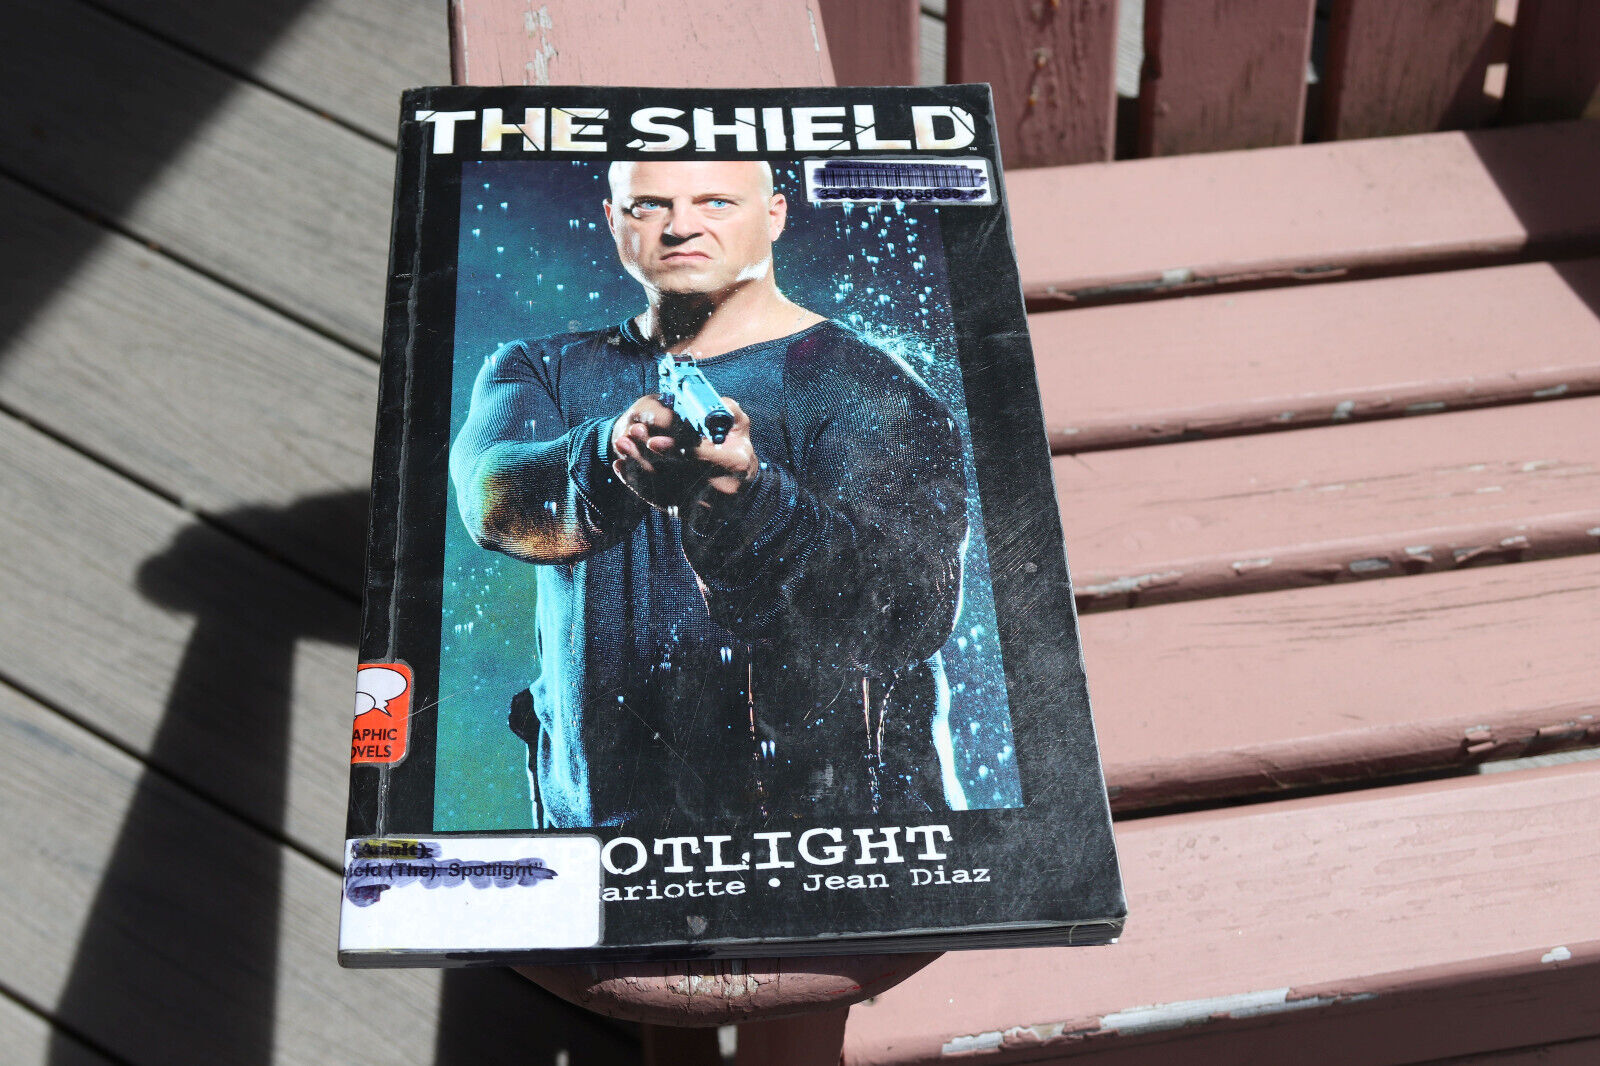 The Shield: Spotlight / Jeff Marionette & Jean Diaz Graphic novel ex-library